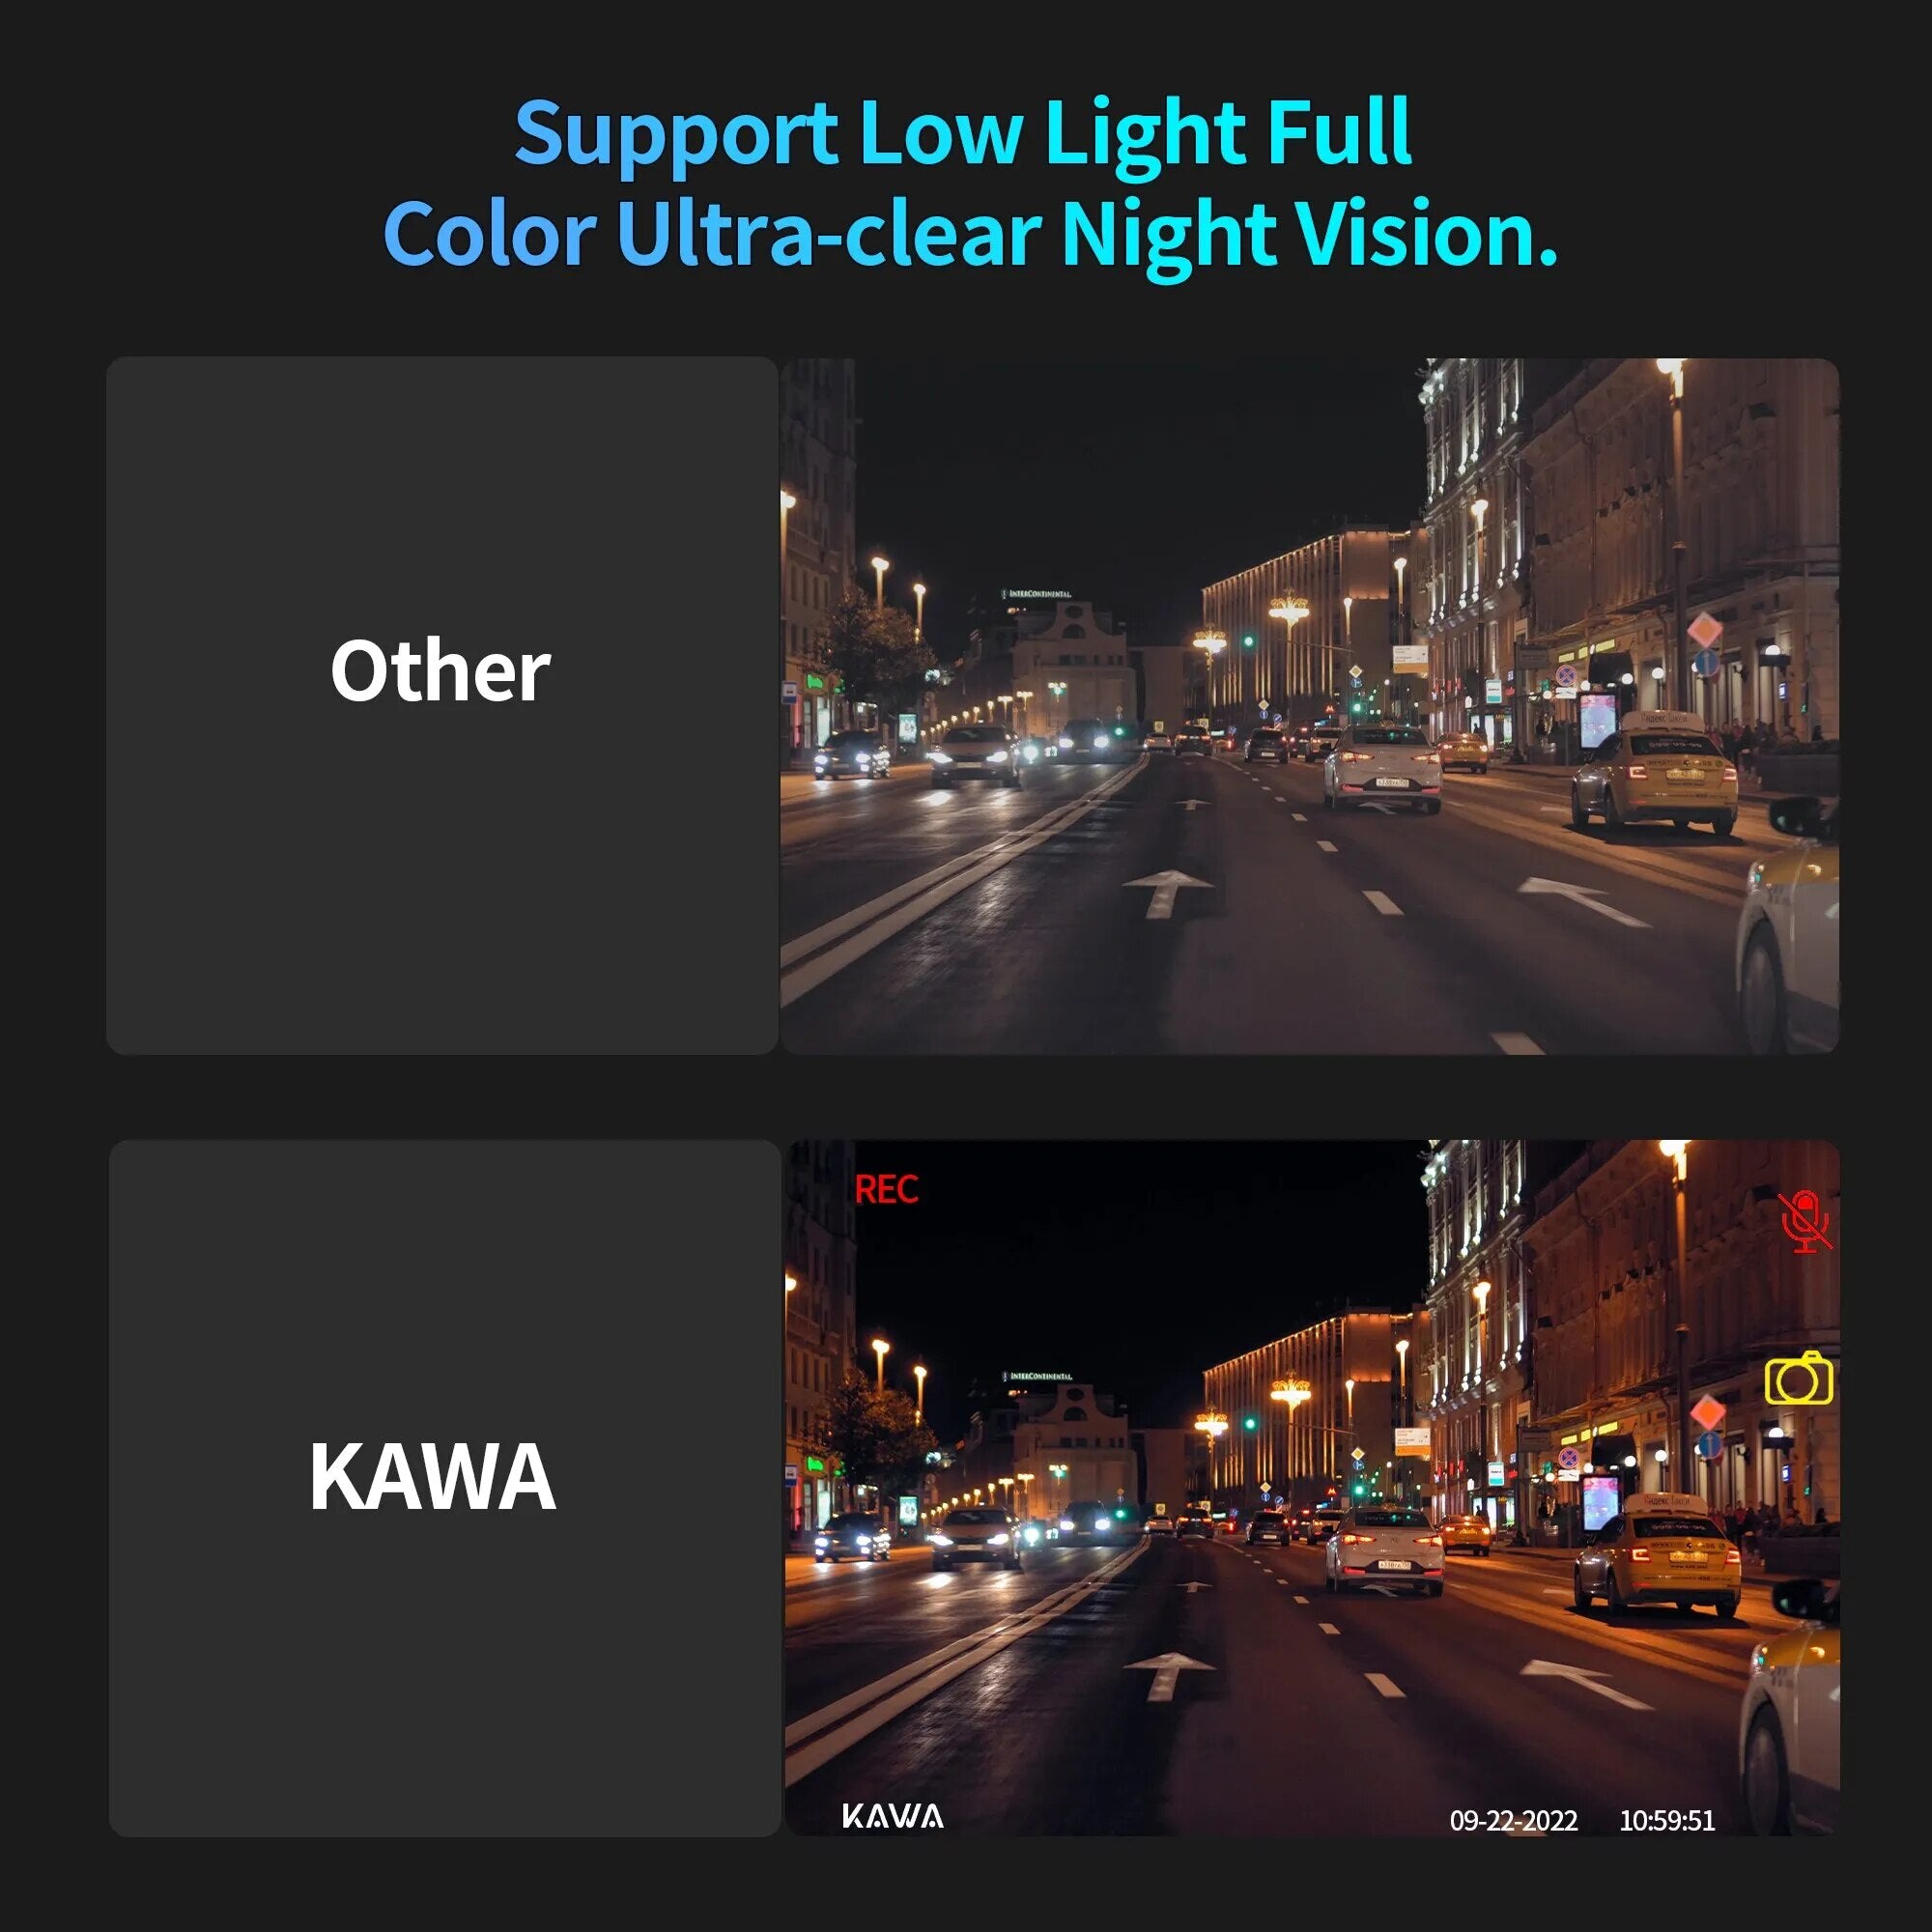 KAWA Car DVR D6 Dash Cam for Car 1440P Video Recorder EN RU FR JP Voice Control 24H Parking Mode WiFi App Control Night Vision